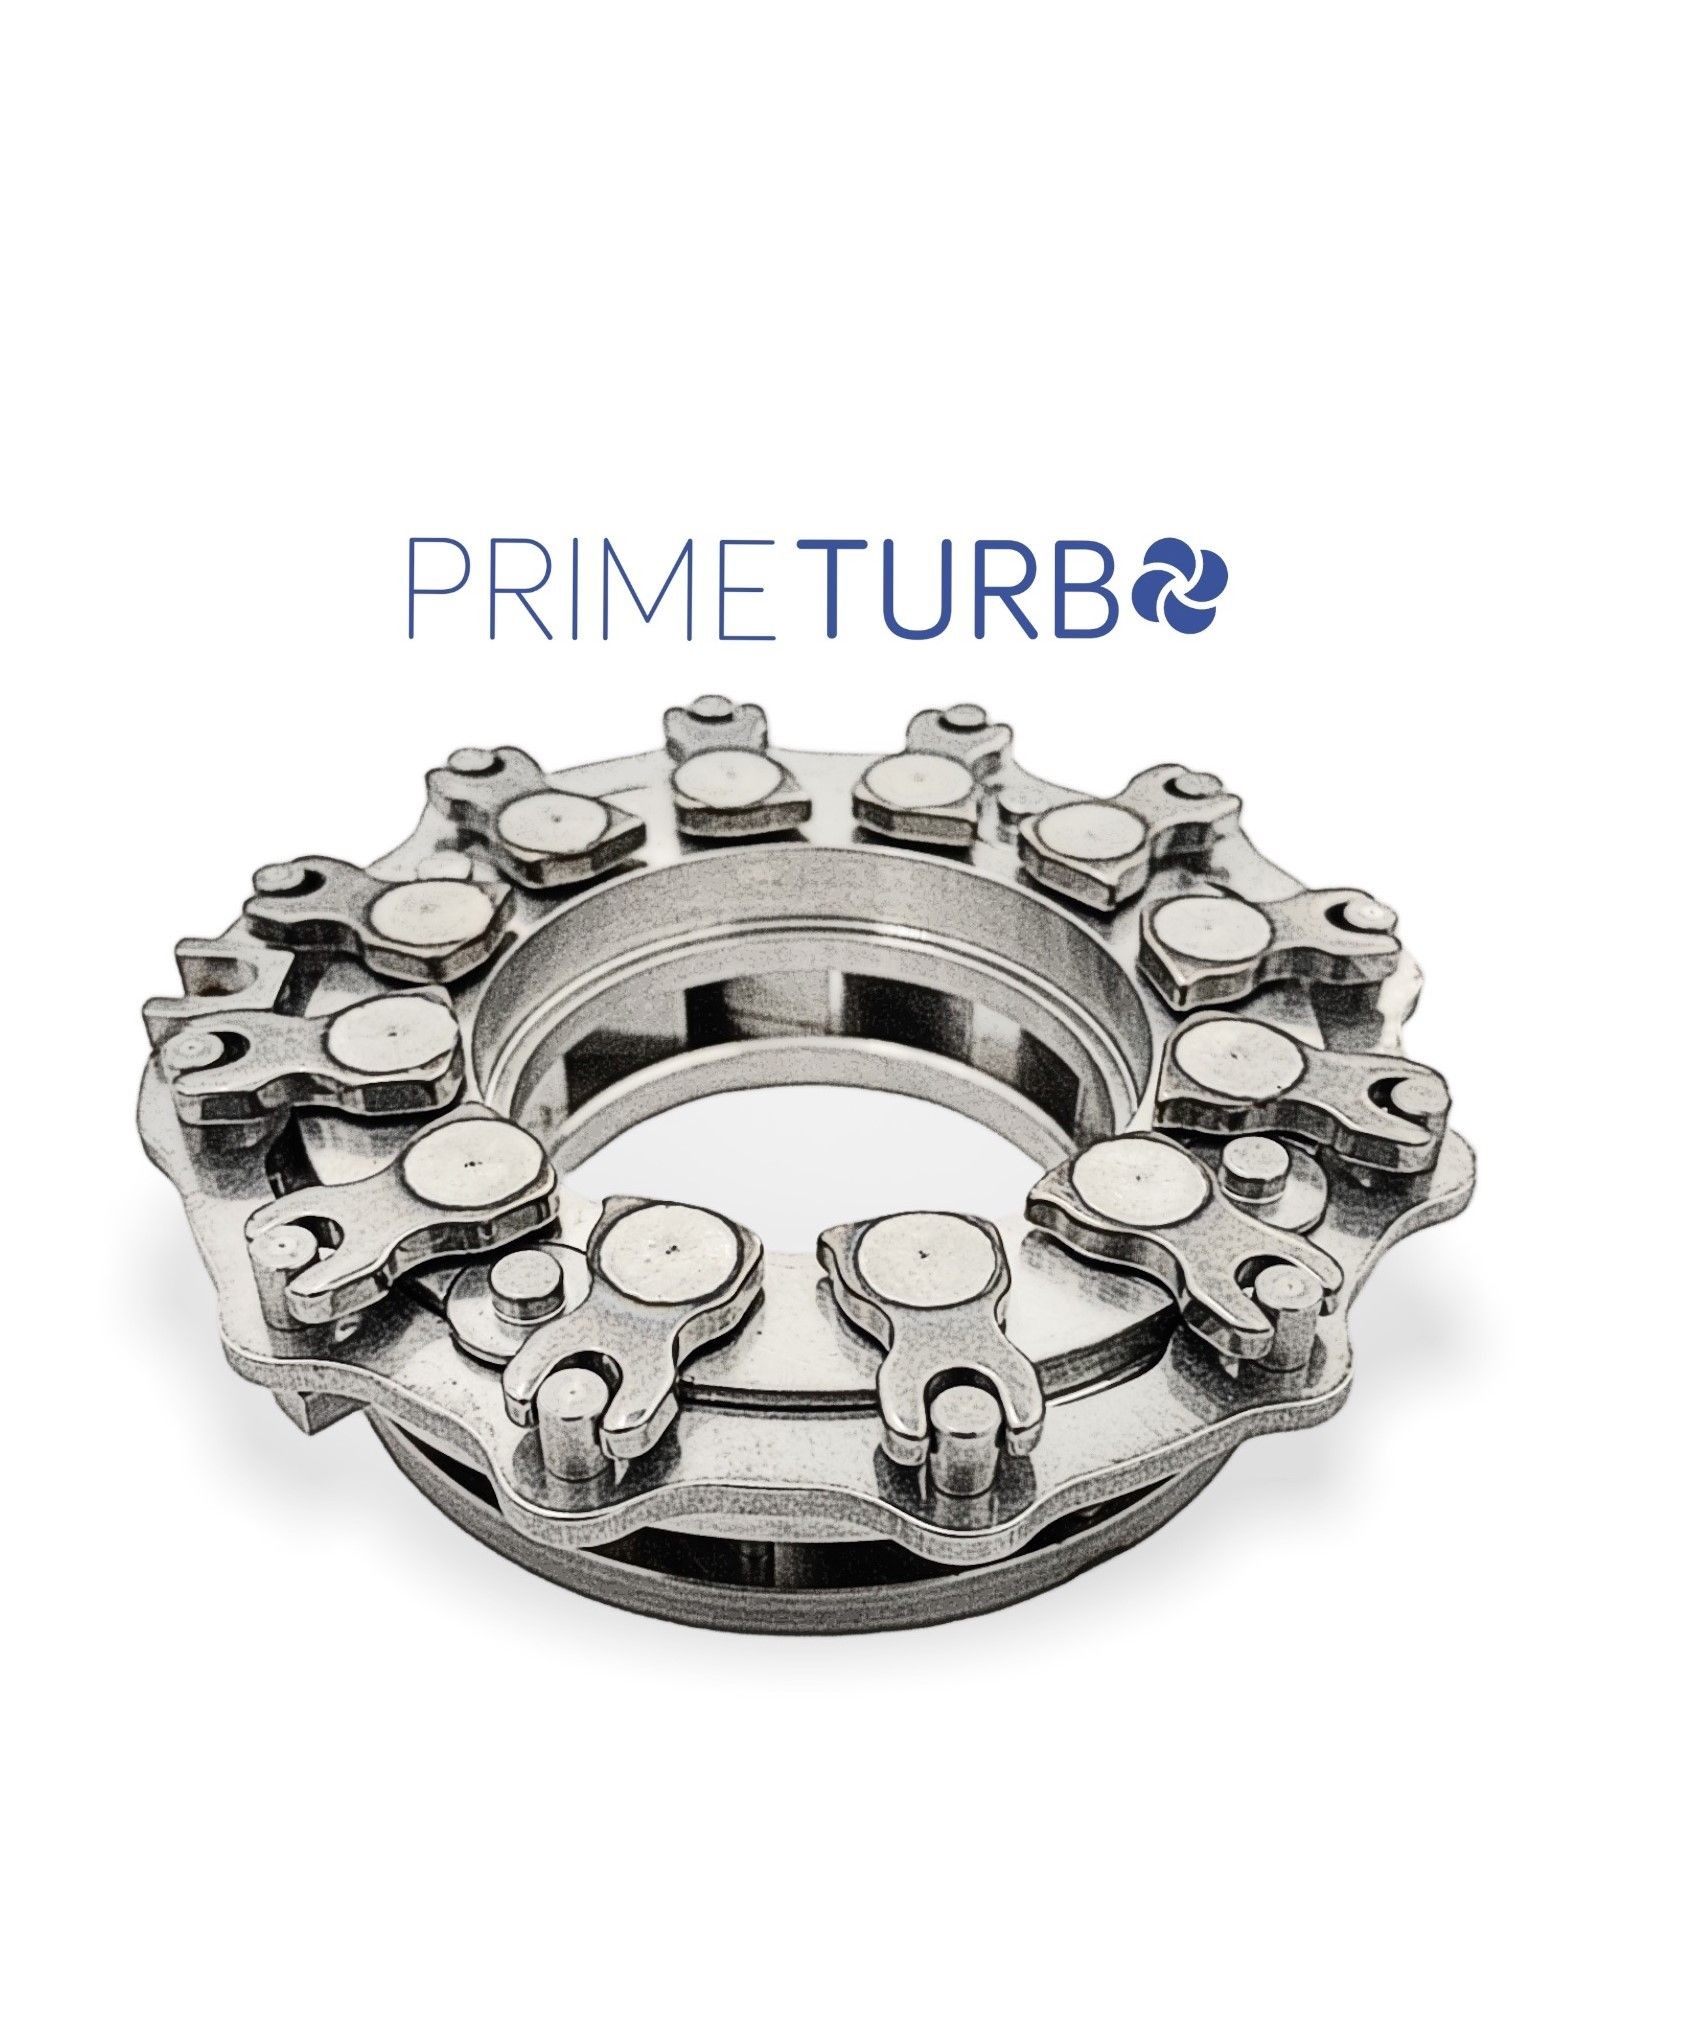 Prime Turbo Turbo inlet gasket X5 E53 new G00562V